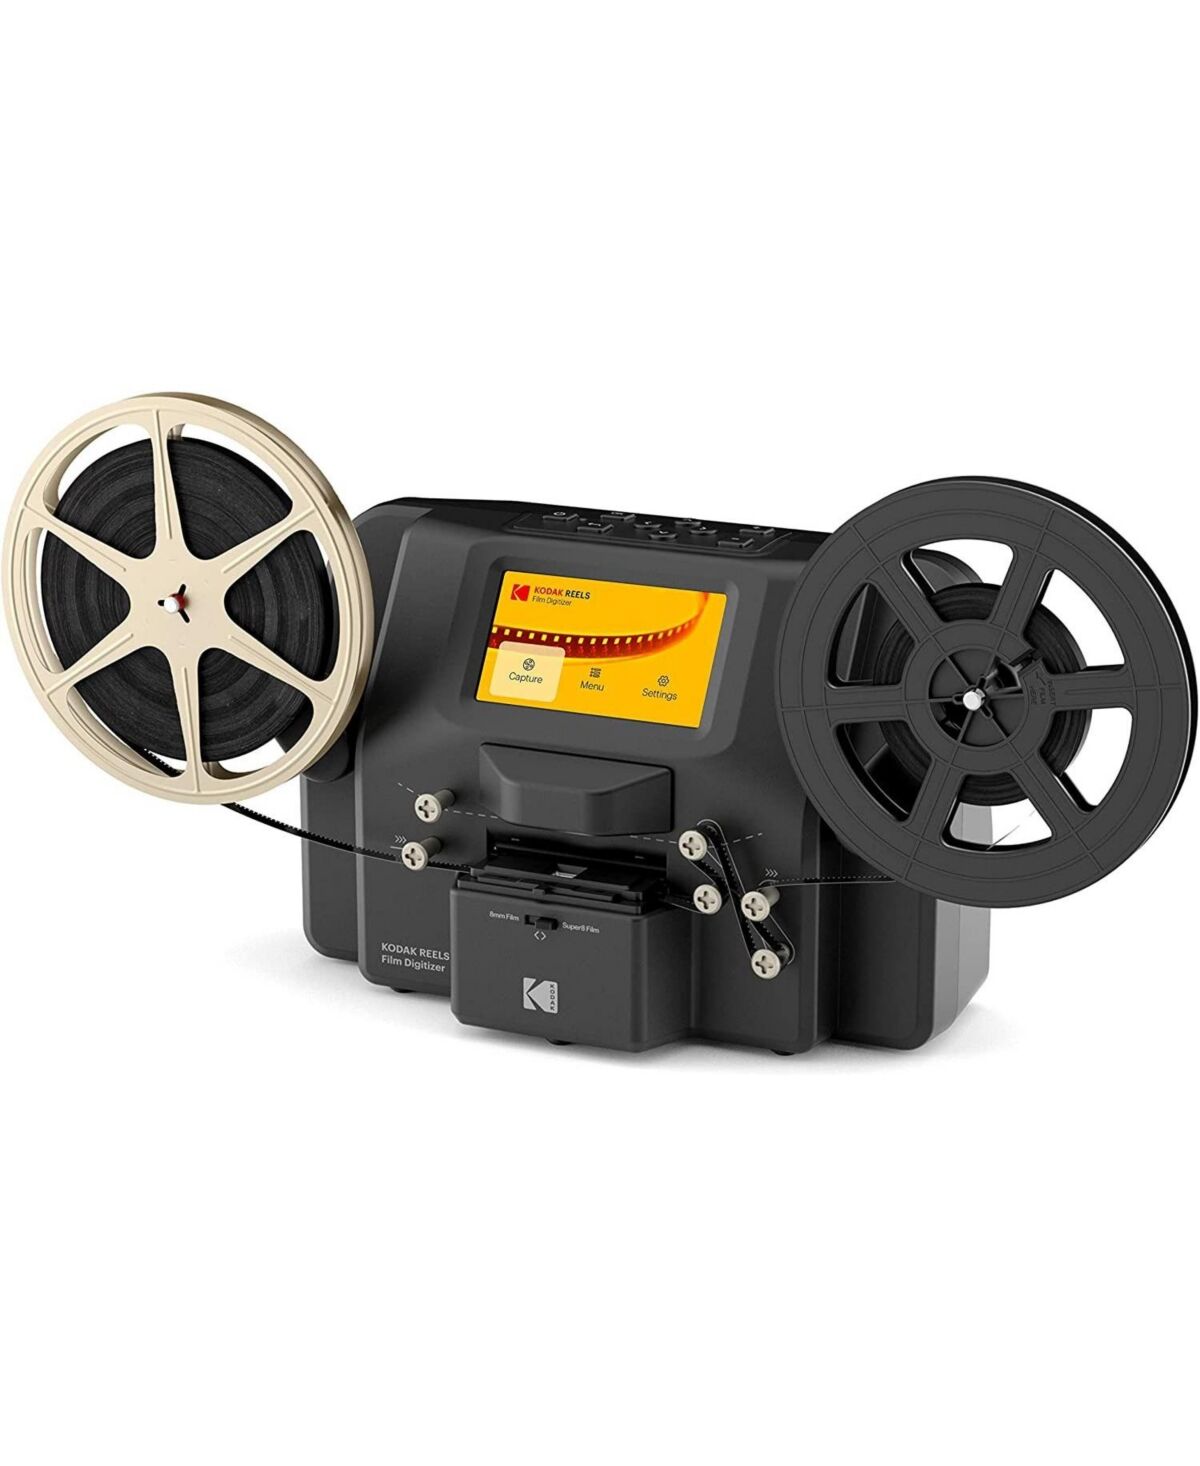 Kodak Reels Film Photo Scanner, Digitizer & Slide Portable Scanner - Black